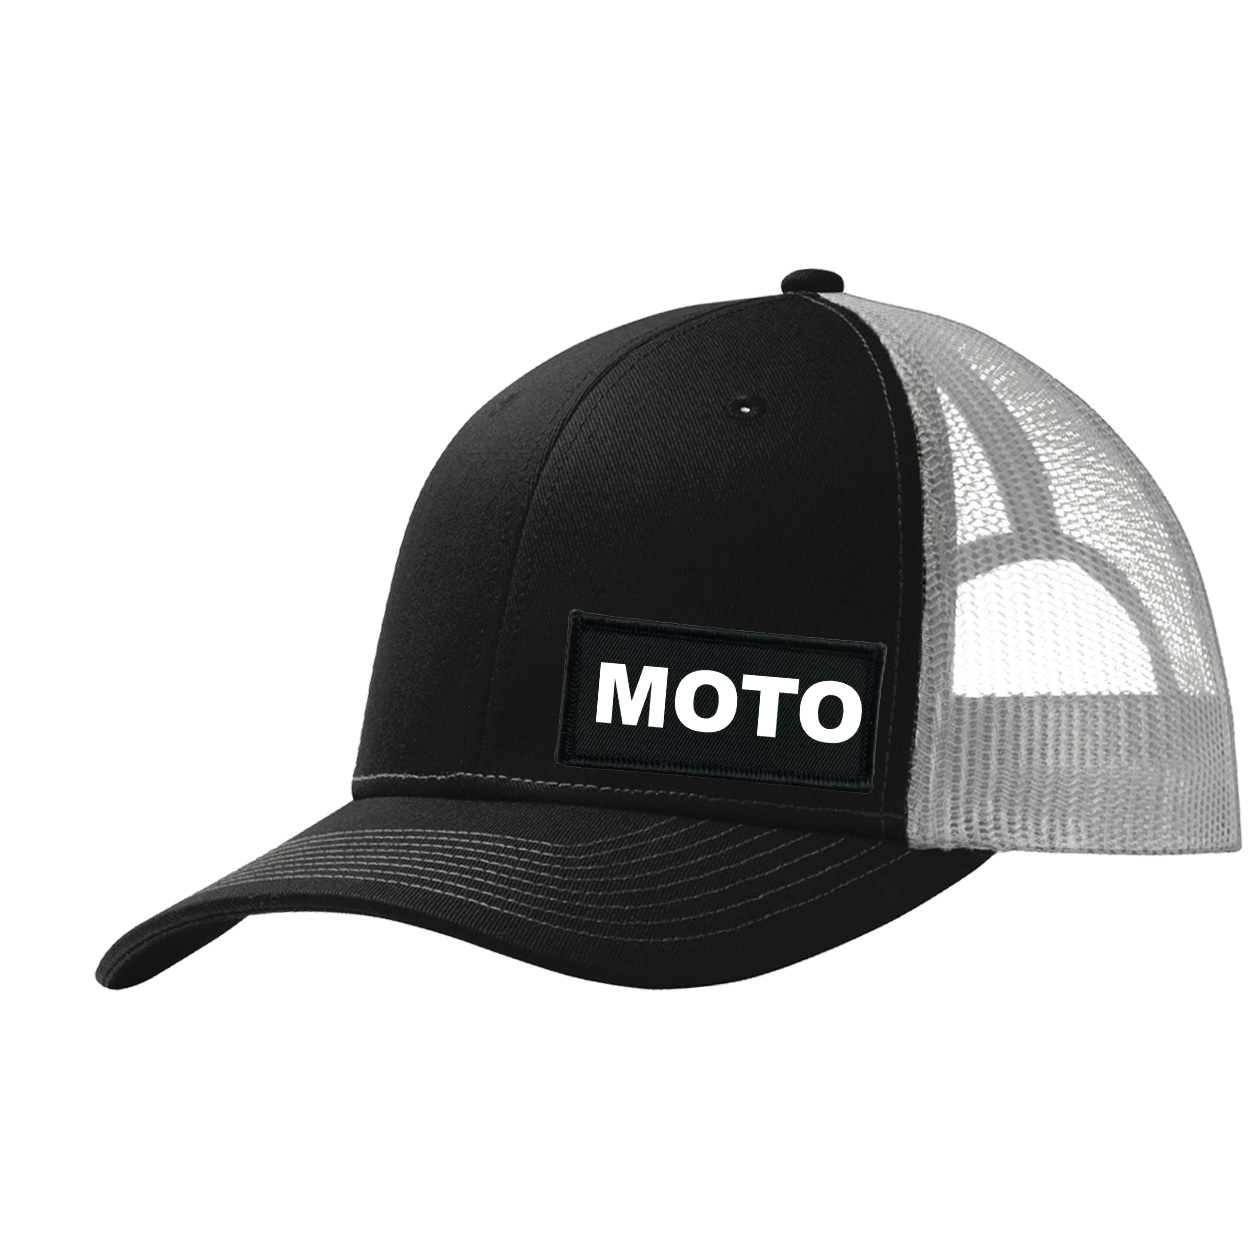 Moto Brand Logo Night Out Woven Patch Snapback Trucker Hat Black/Gray